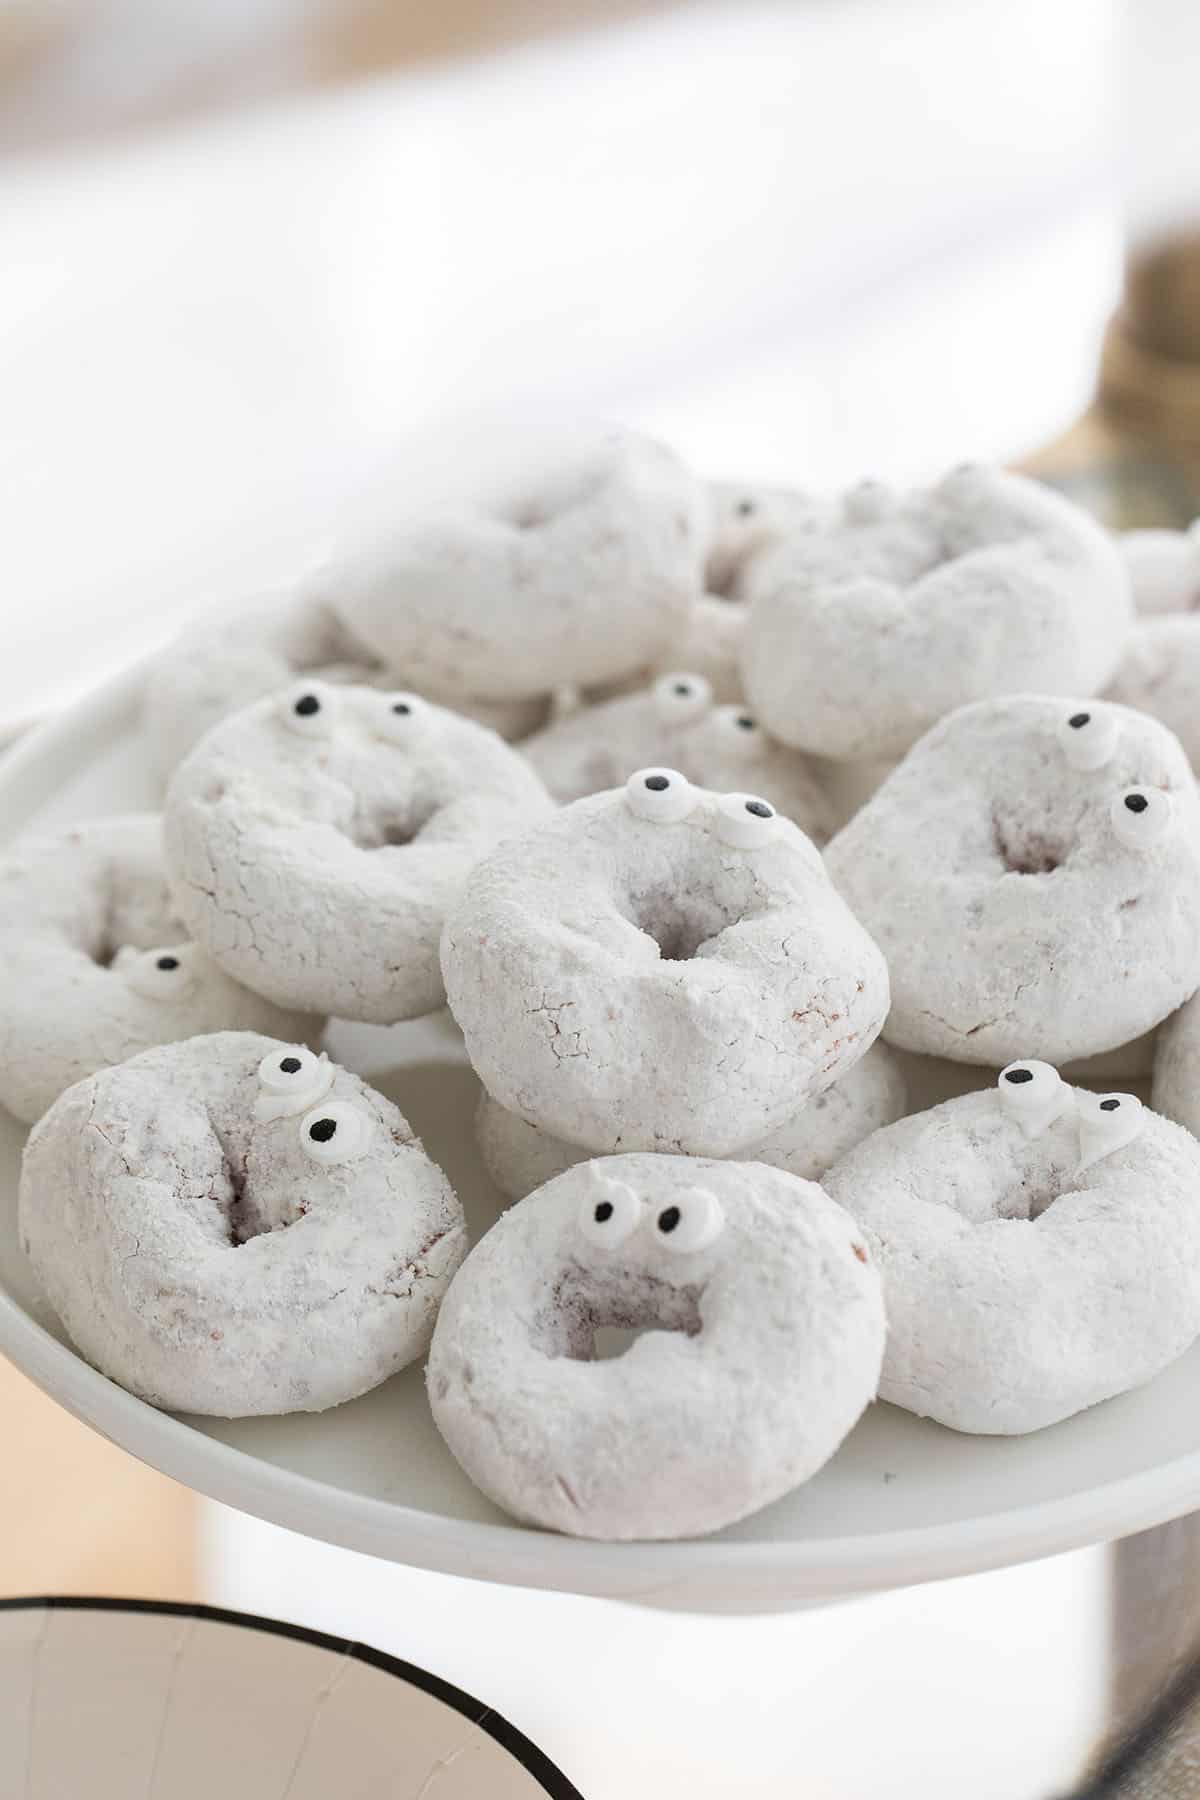 Mini powdered sugar donuts for Halloween.